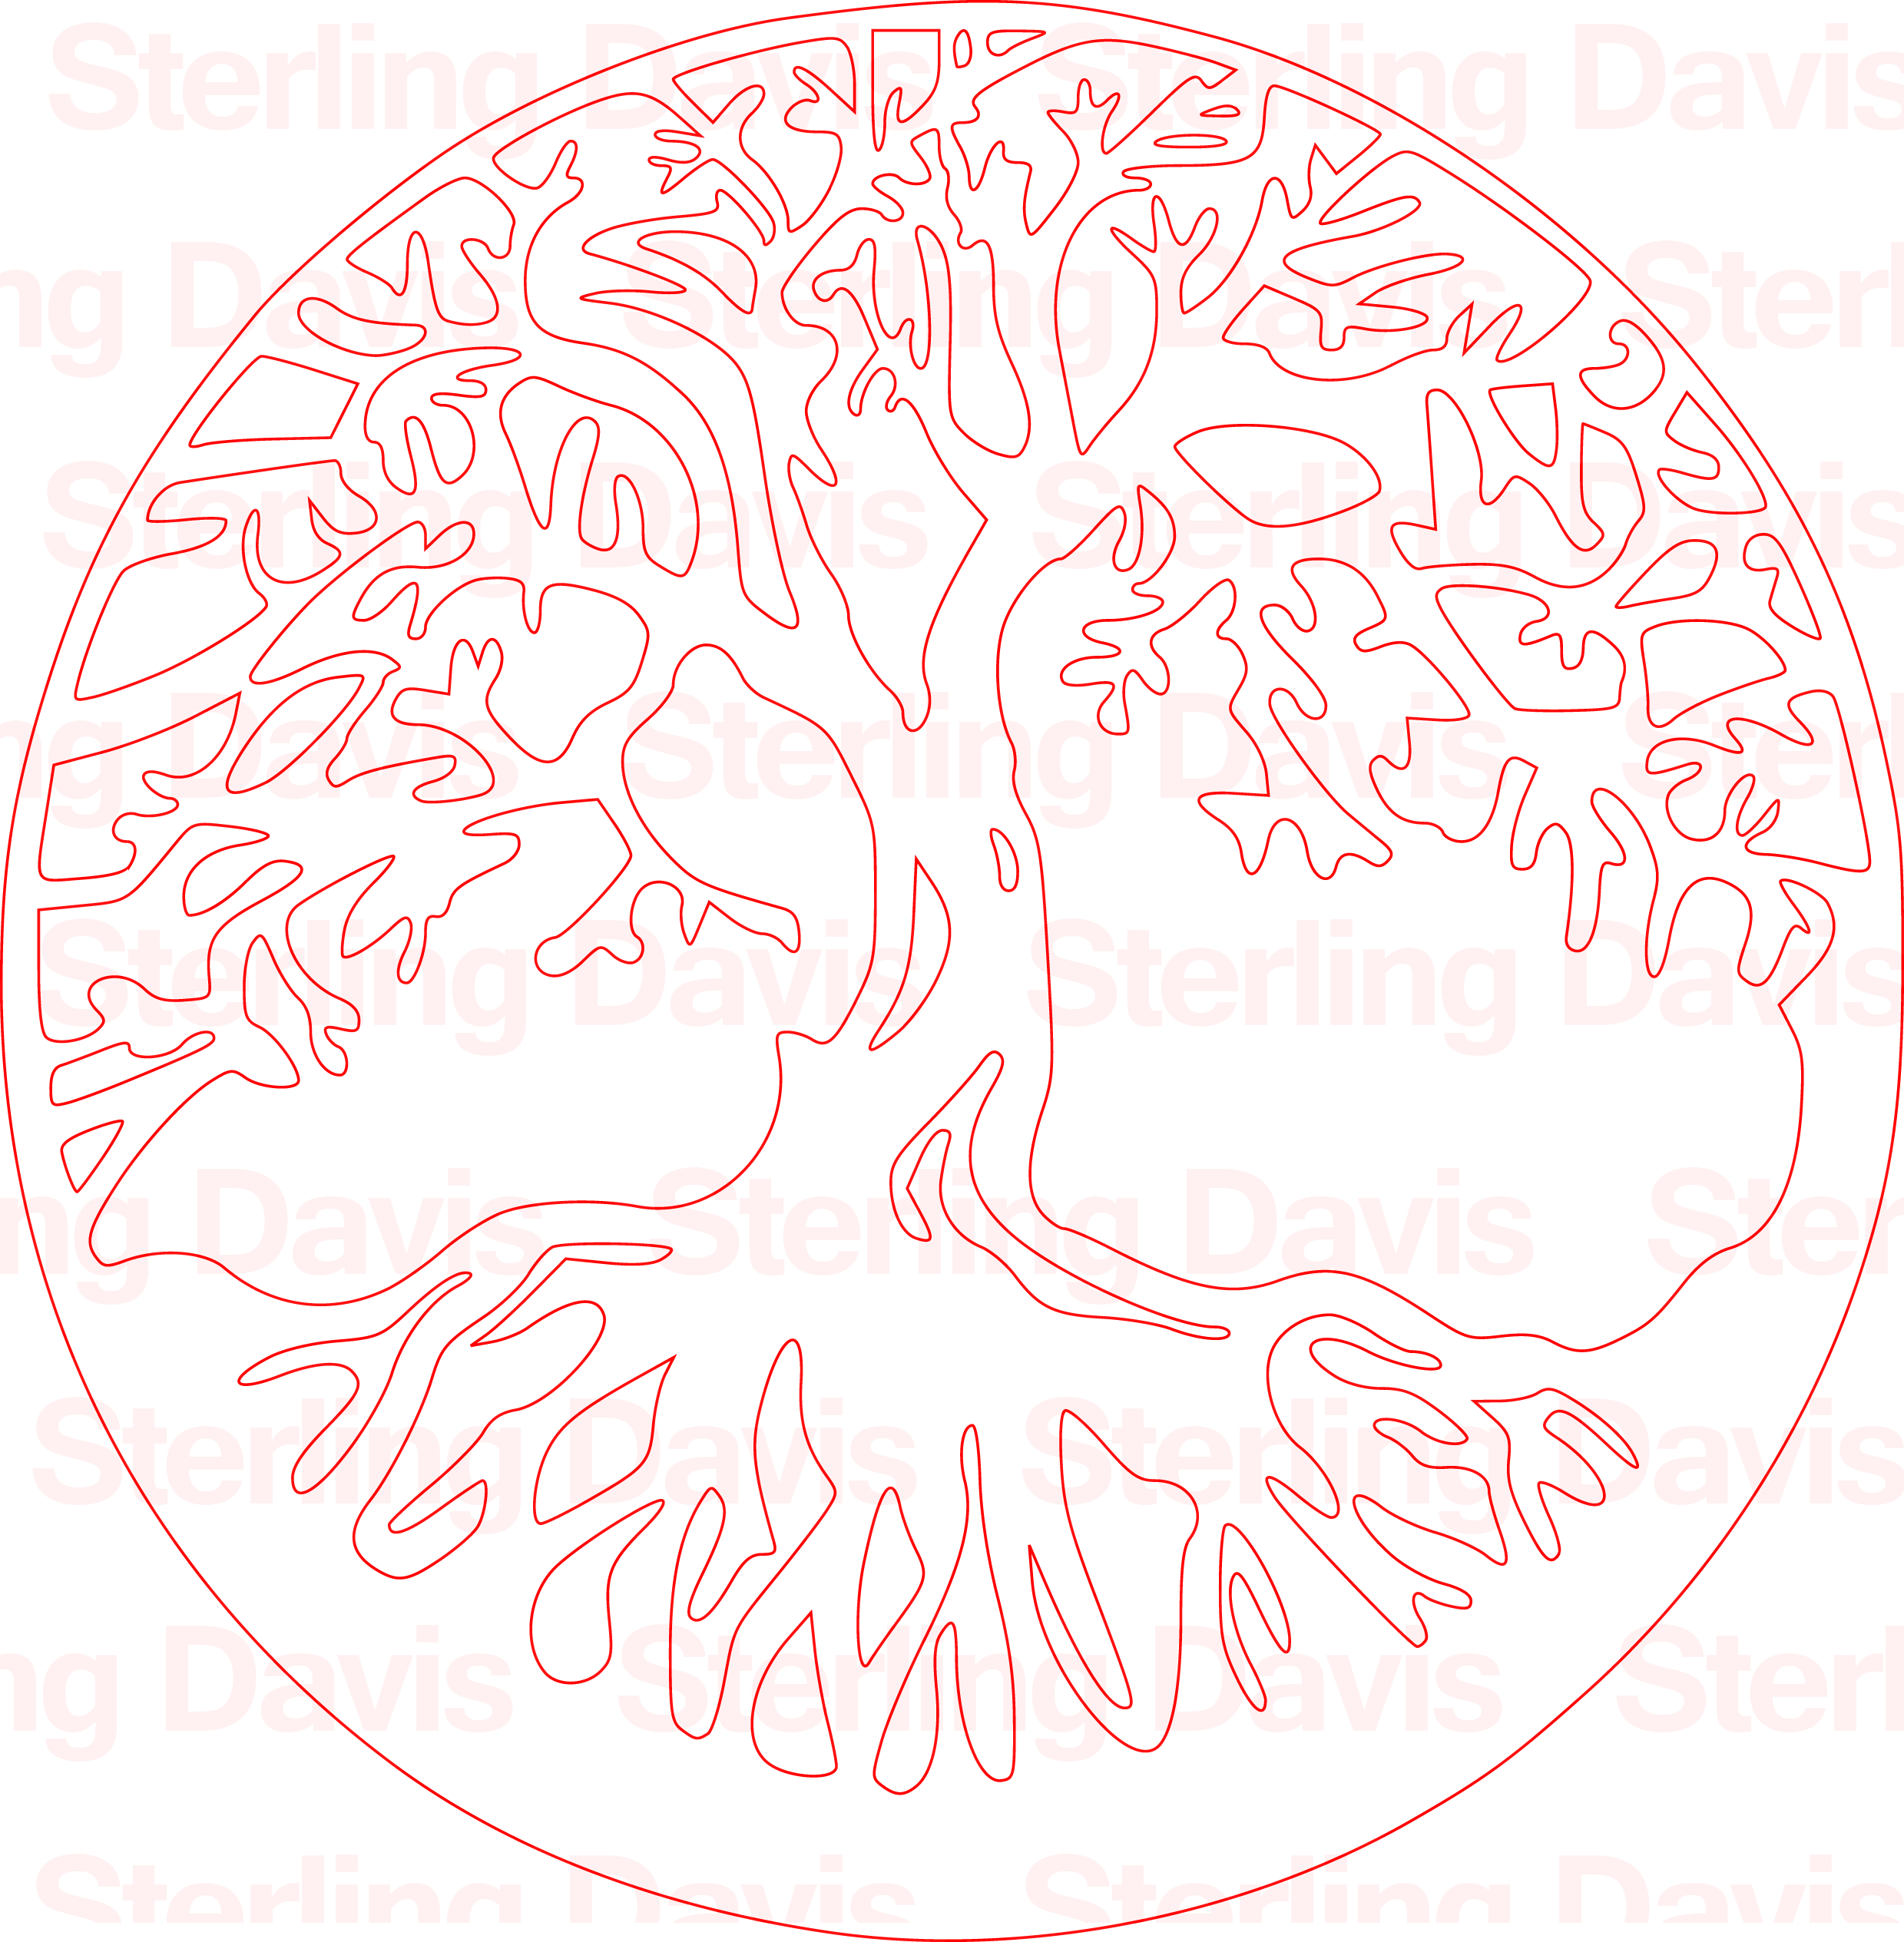 tree-of-life-scroll-saw-pattern-by-sterling-davis-maker-patterns